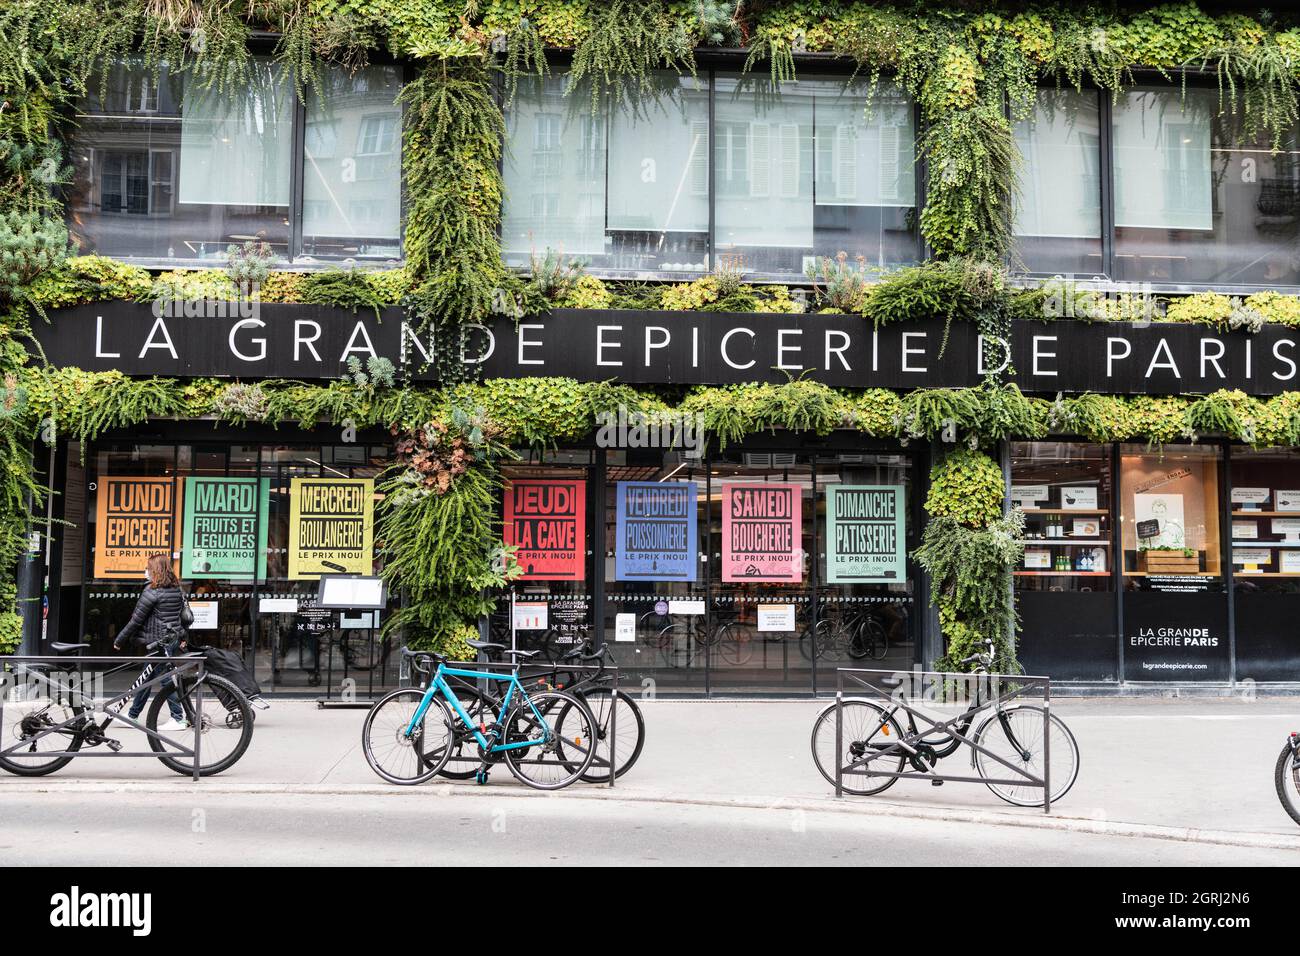 Le grand epicerie paris hi-res stock photography and images - Alamy